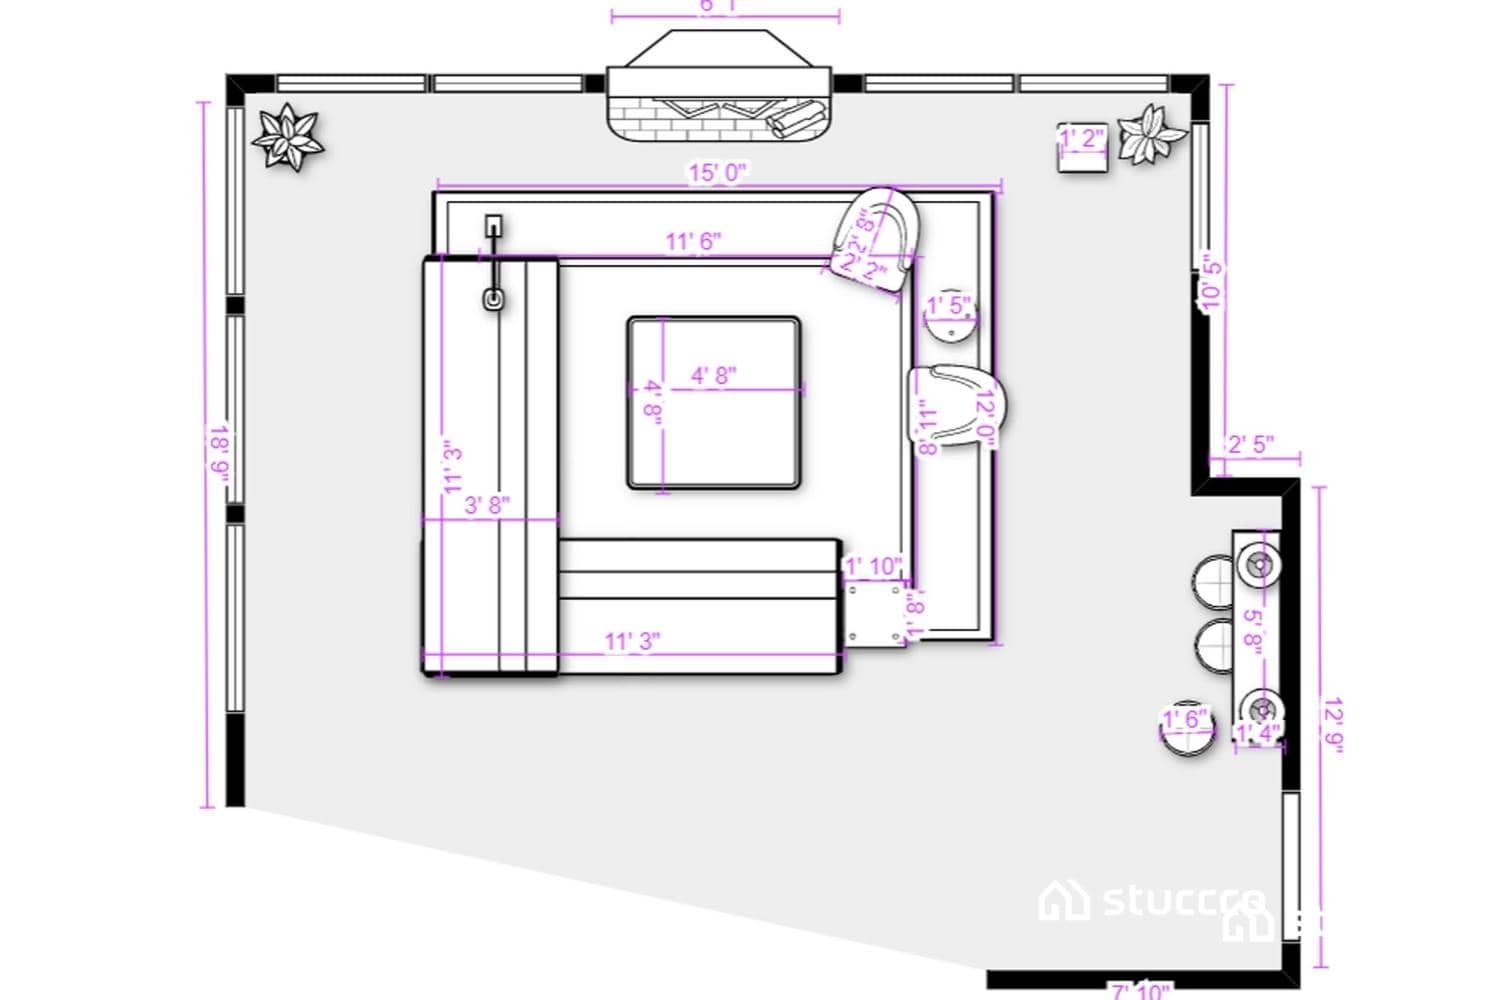 Stuccco example floor plan, online interior design